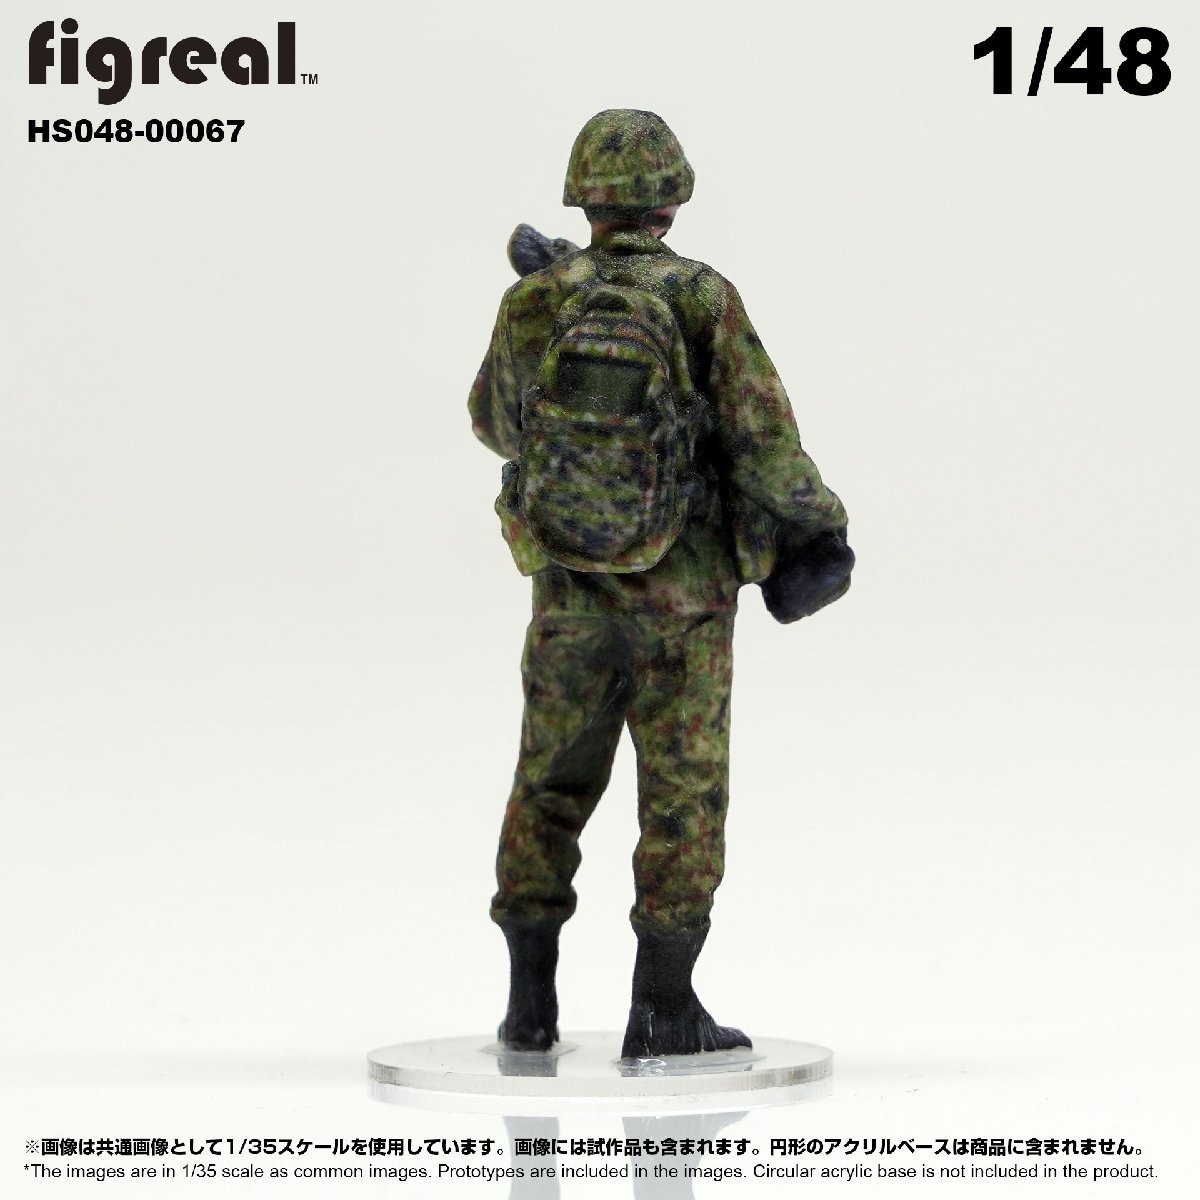 HS048-00067 figreal 陸上自衛隊 1/48 JGSDF 高精細フィギュア_画像5